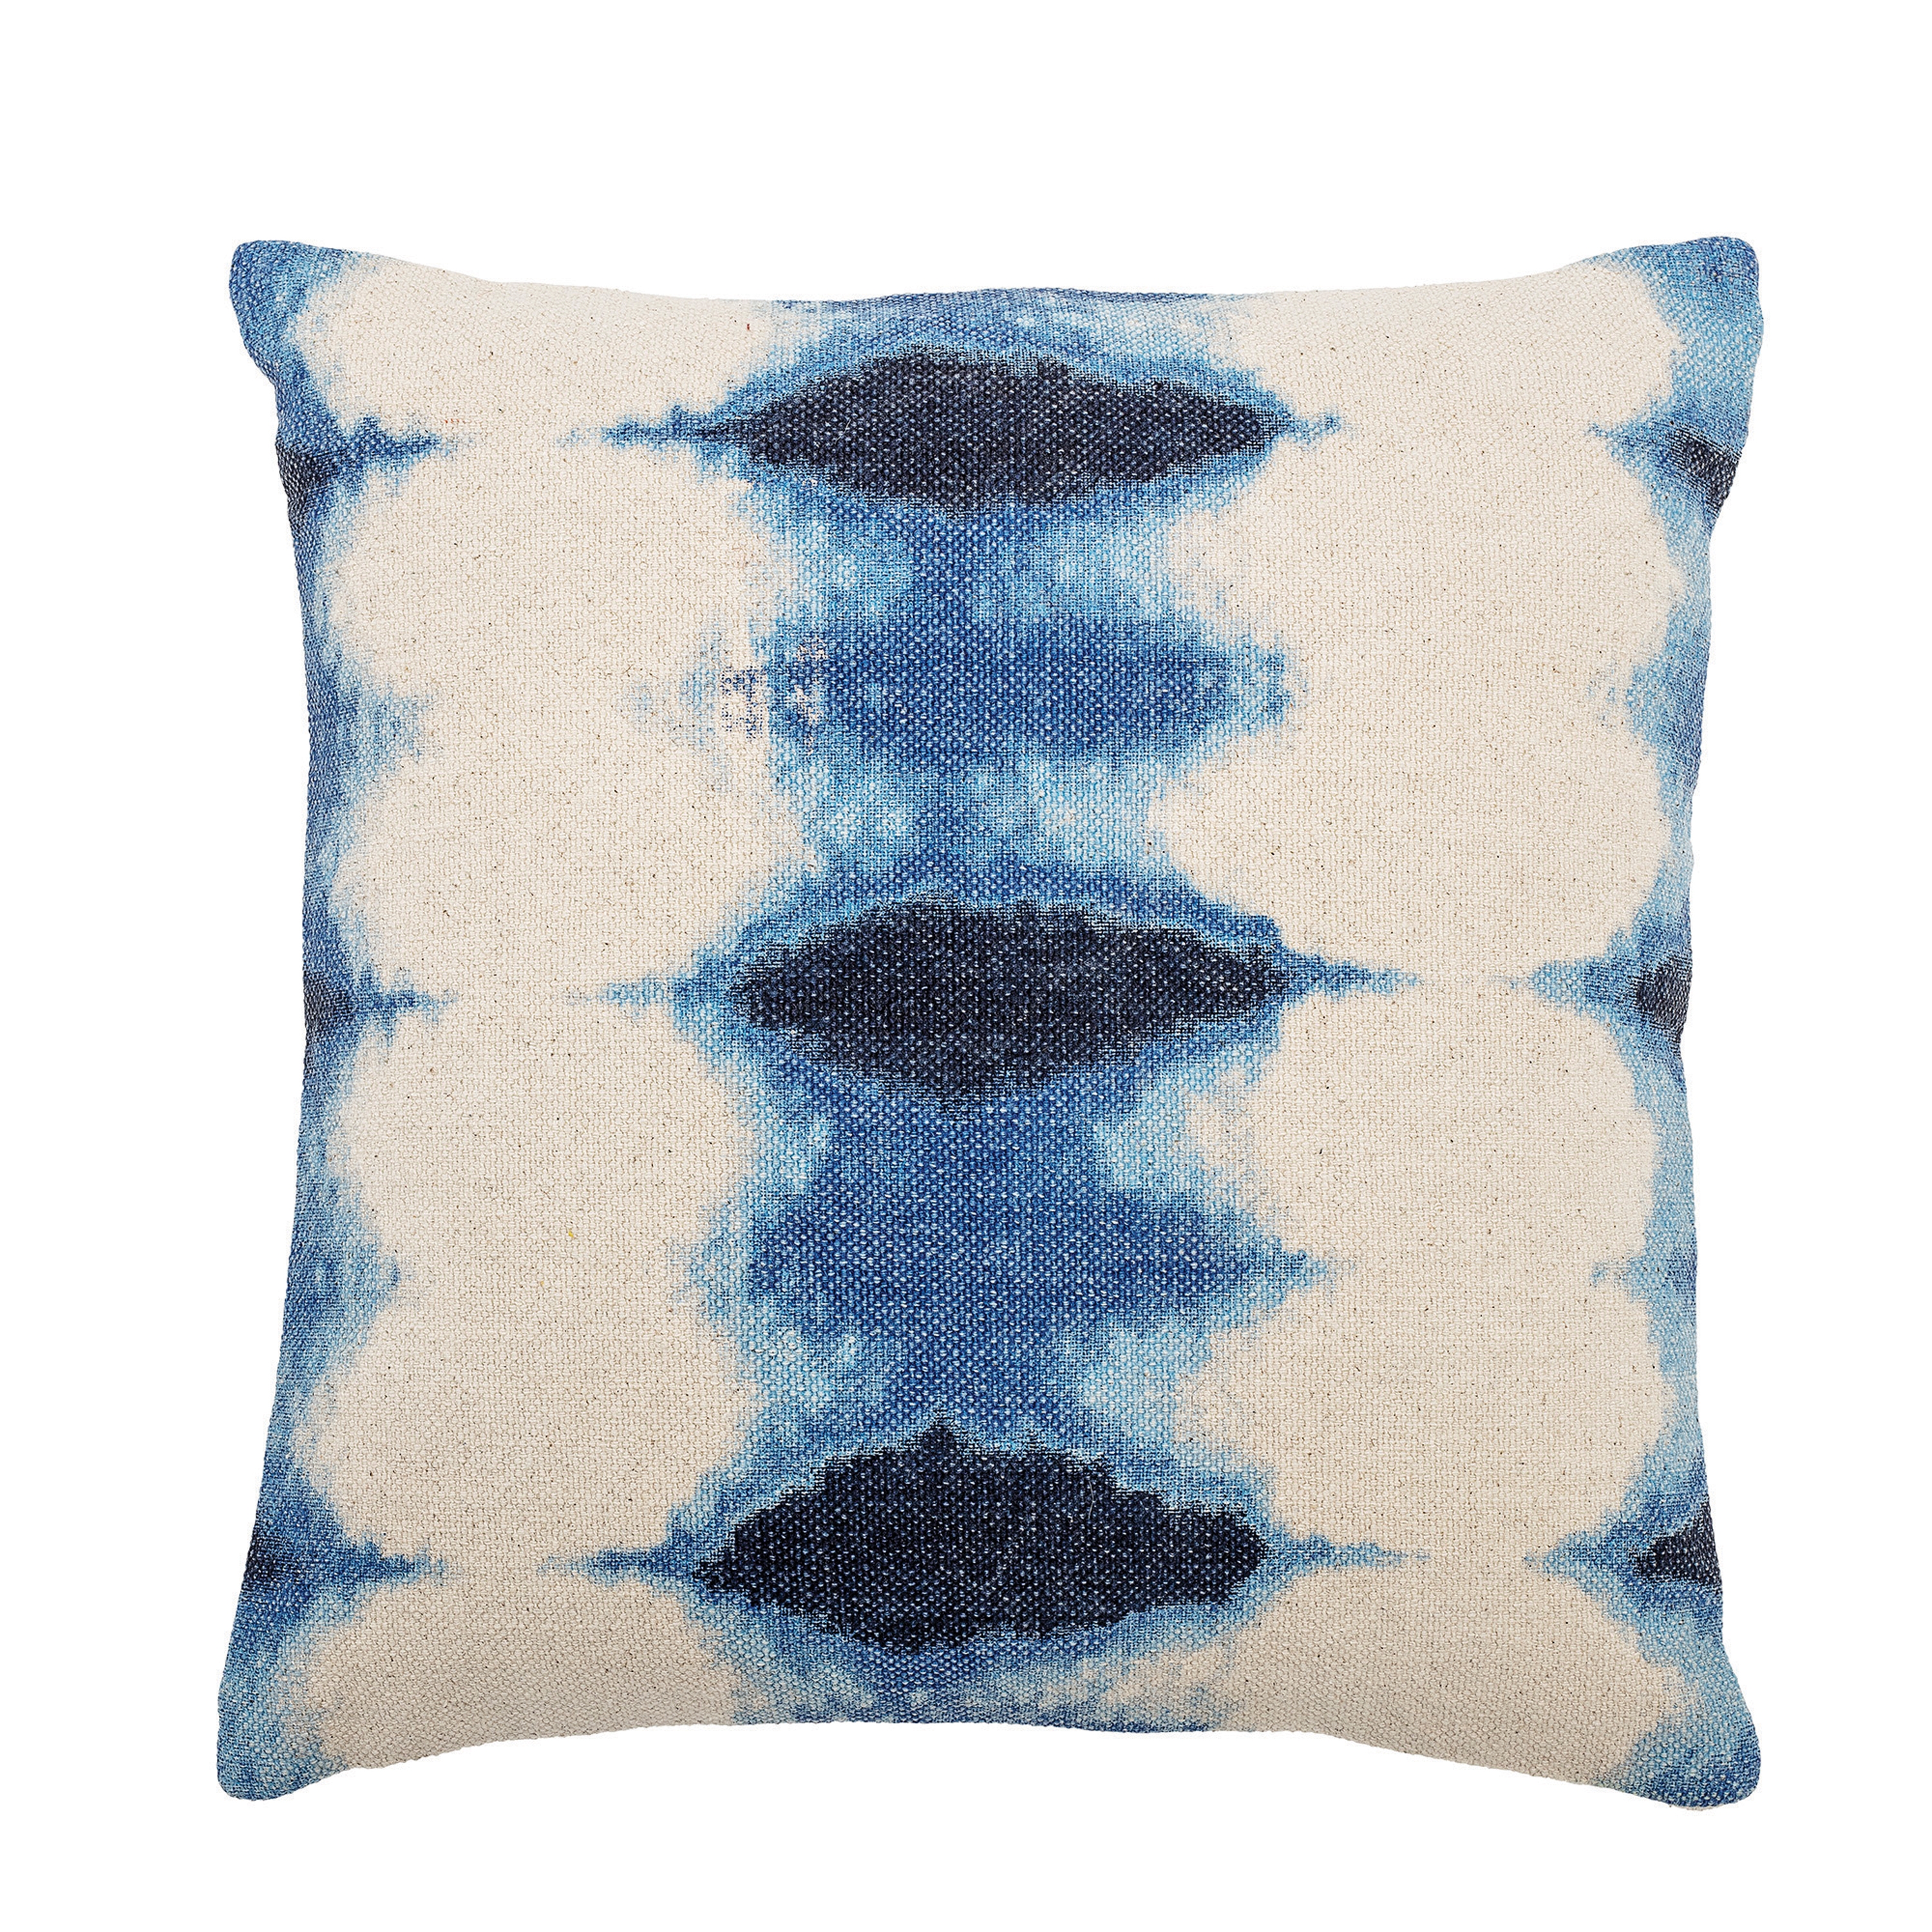 Square Blue Tie-Dyed Cotton Pillow - Image 0